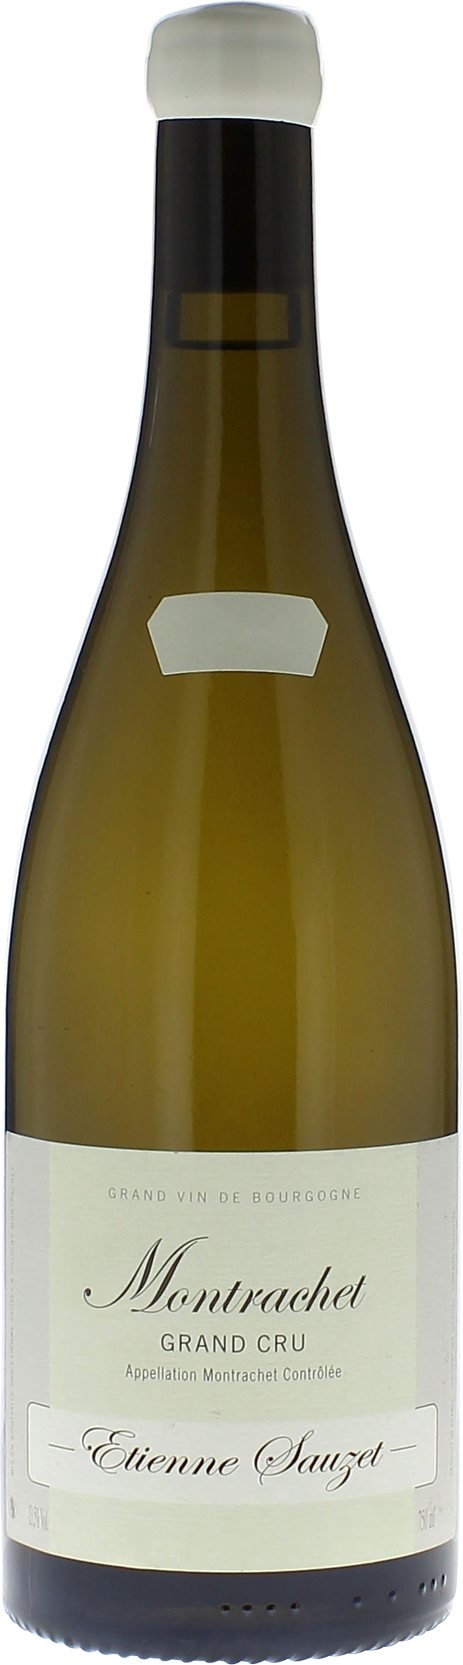 Montrachet grand cru 2010 Domaine SAUZET, Bourgogne blanc